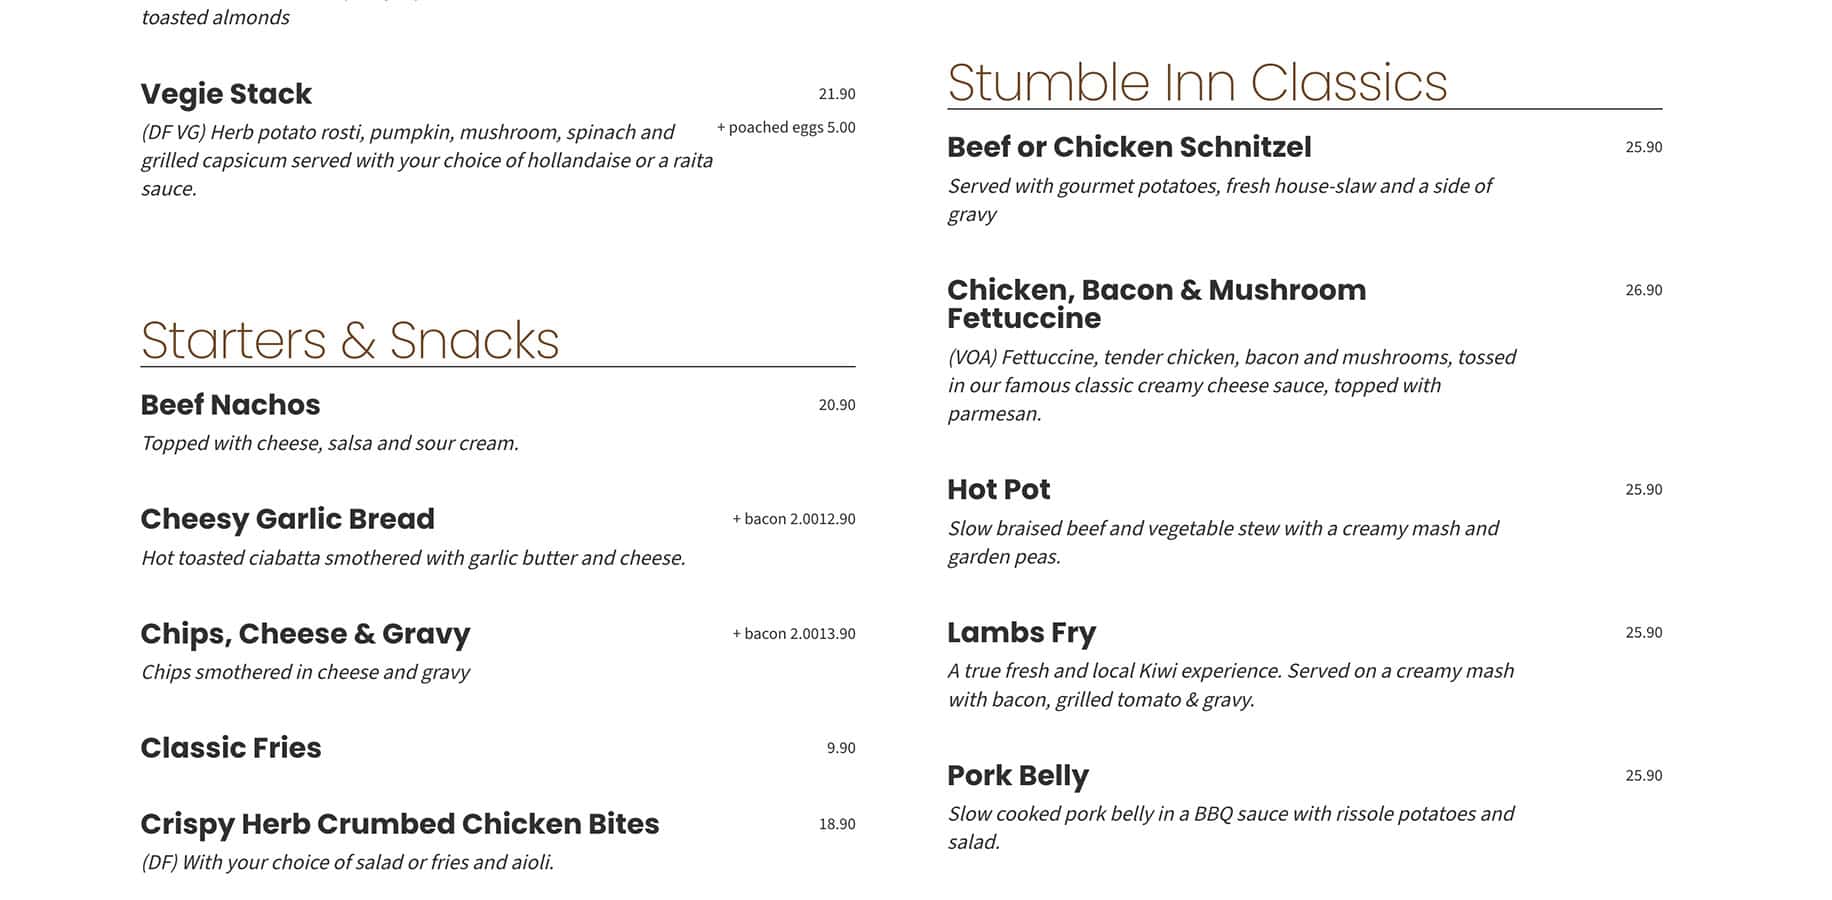 Stumble Inn menu list